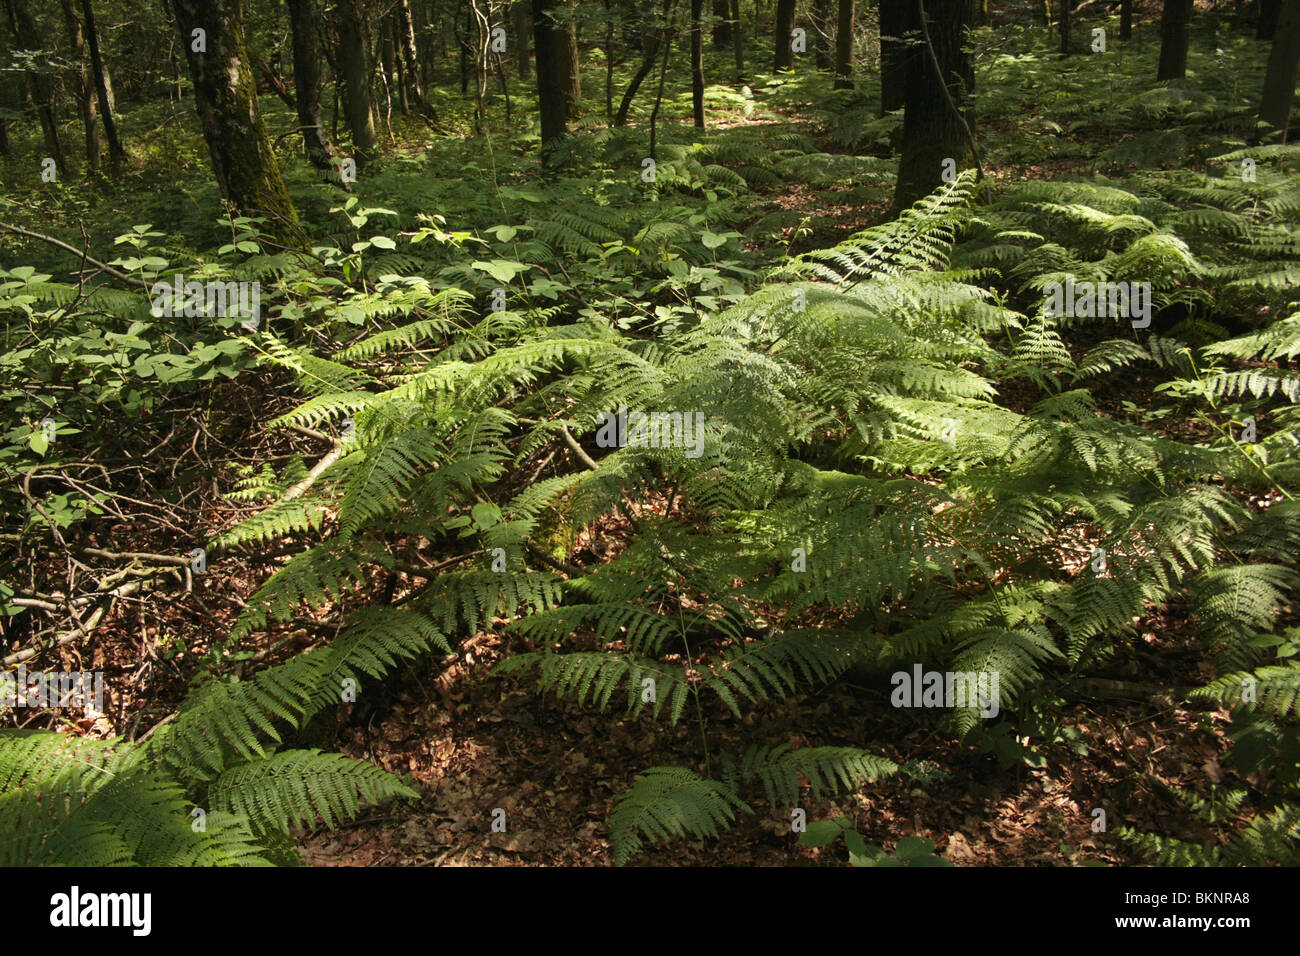 Adelaarvarens als bodembedekkers; Brake ferns in the wood Stock Photo